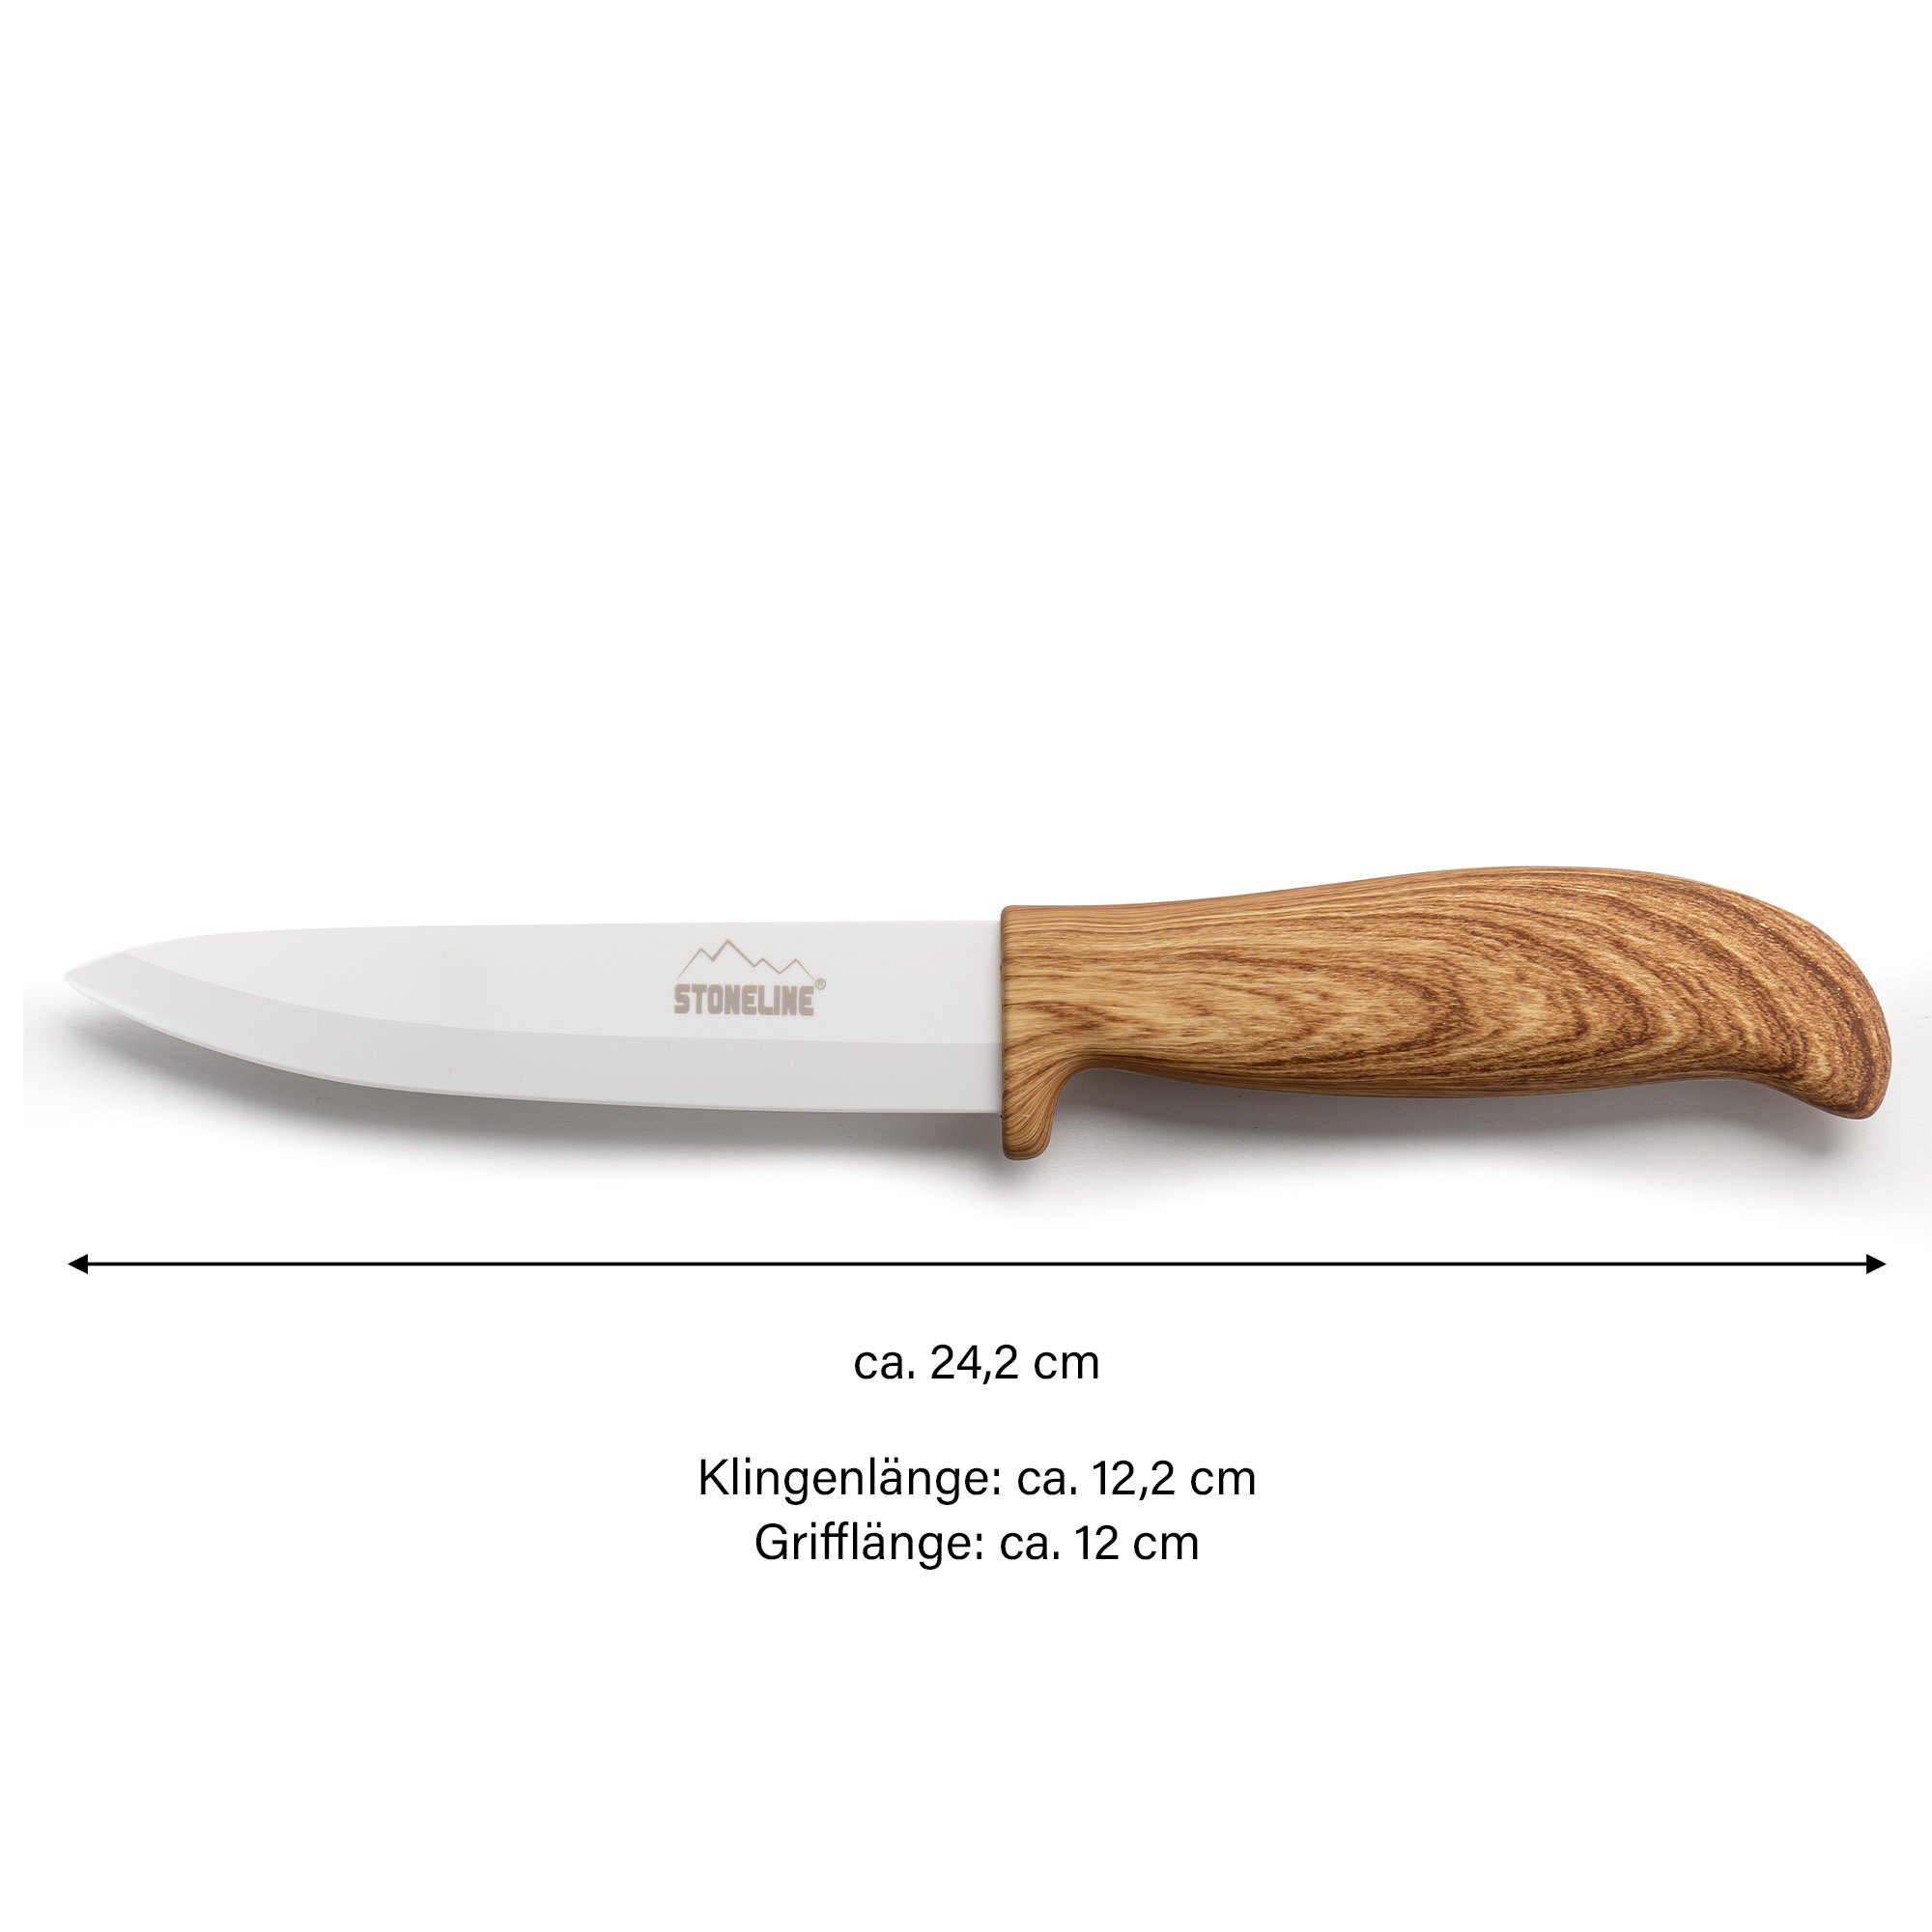 STONELINE® CERAMIC Knife 24 cm All-Purpose Knife, Safety Sheath | Back to Nature